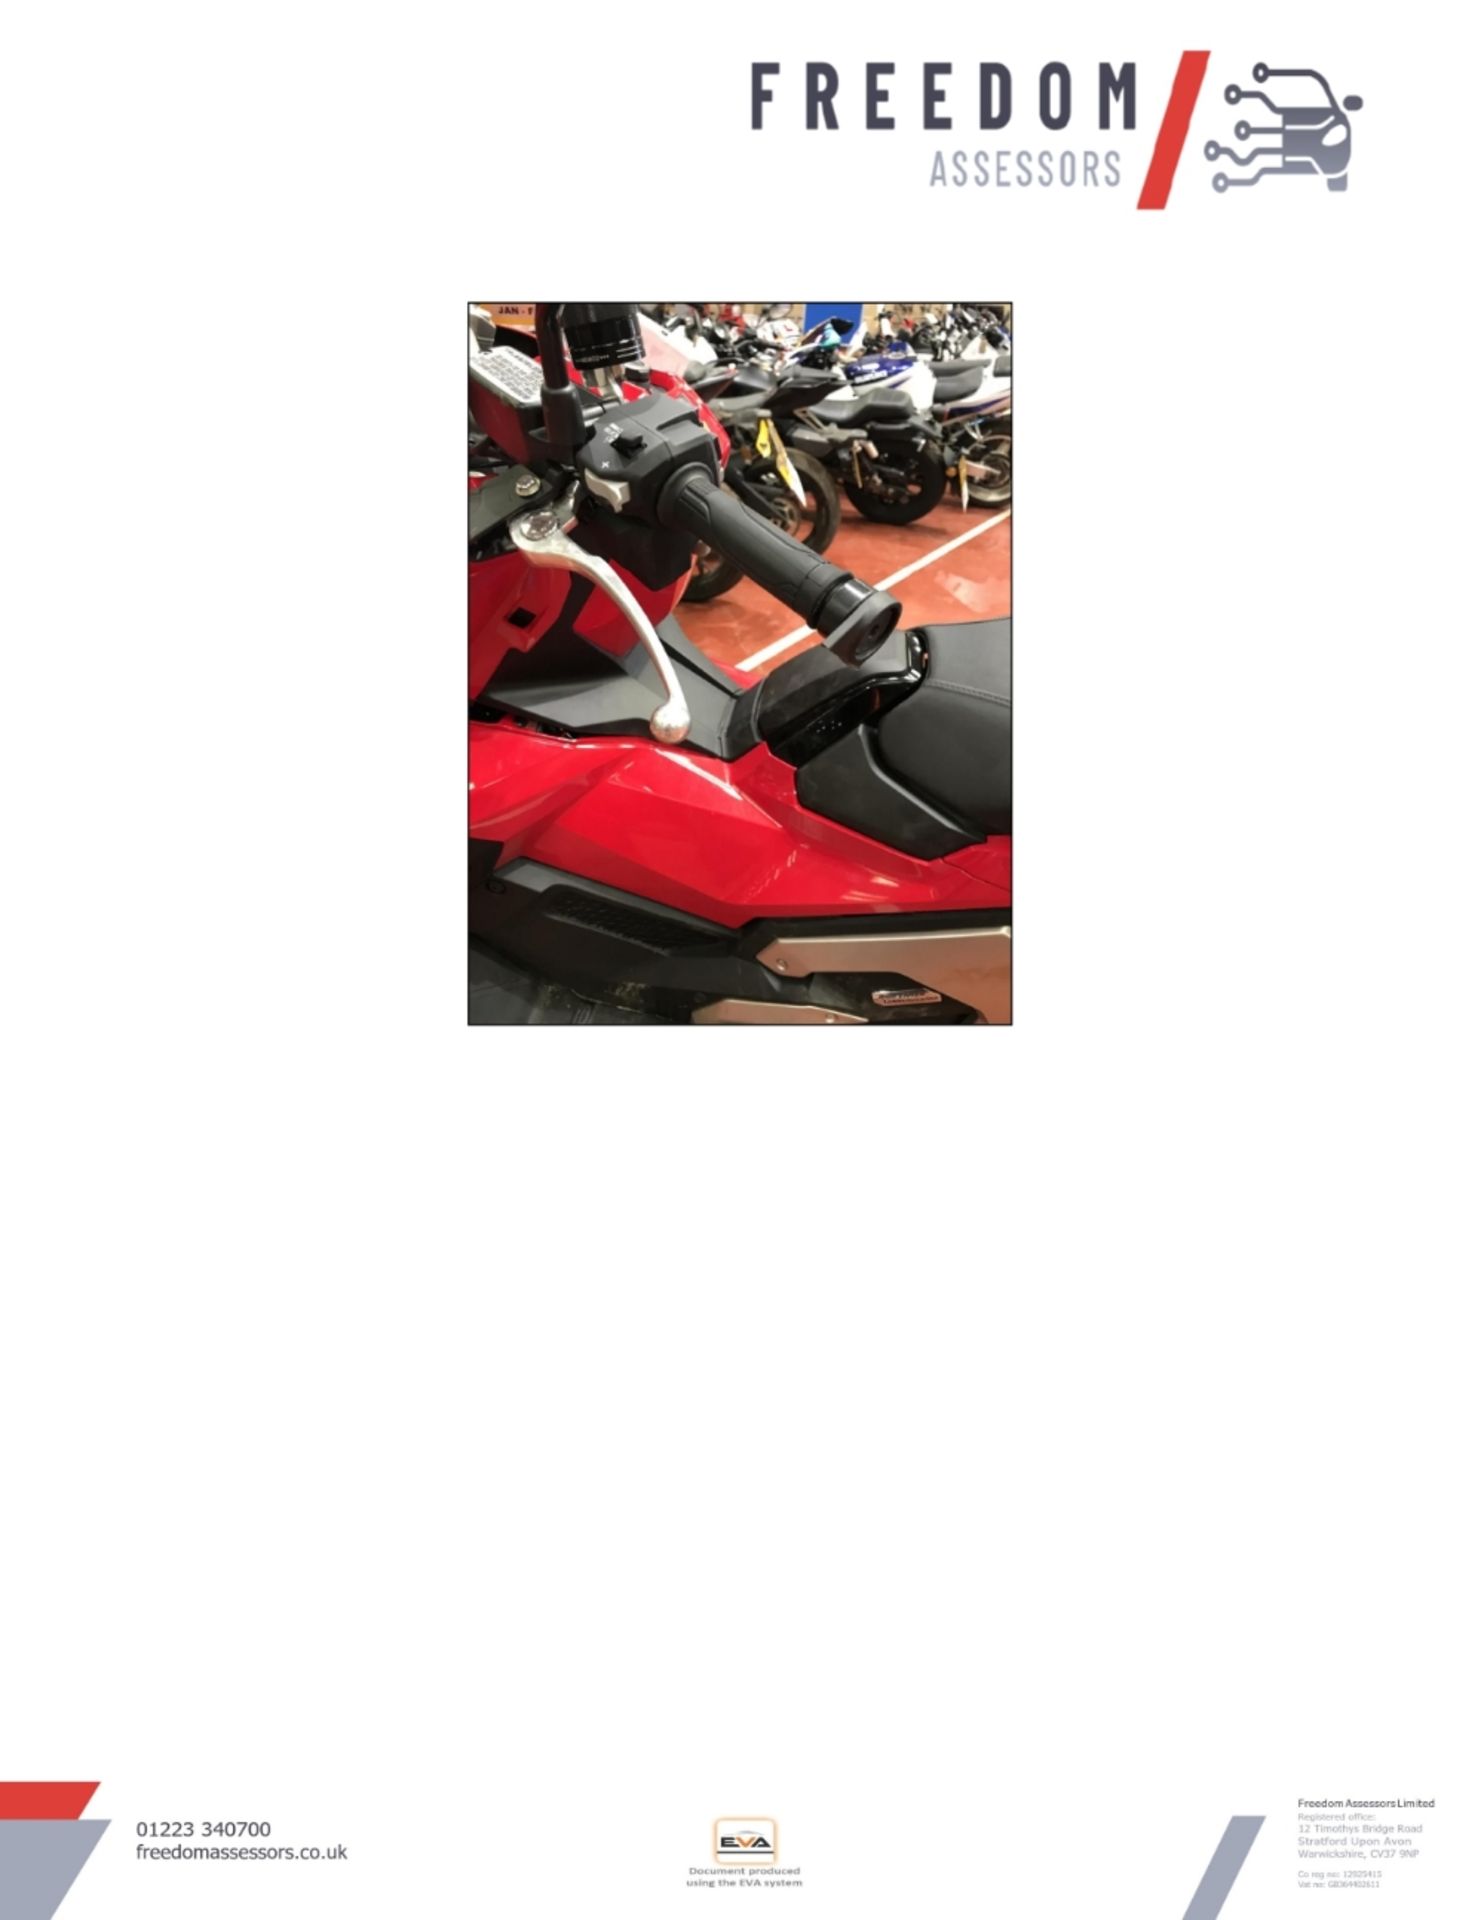 LG21 WMX Honda ADV 750-M Motorcycle - Image 16 of 19